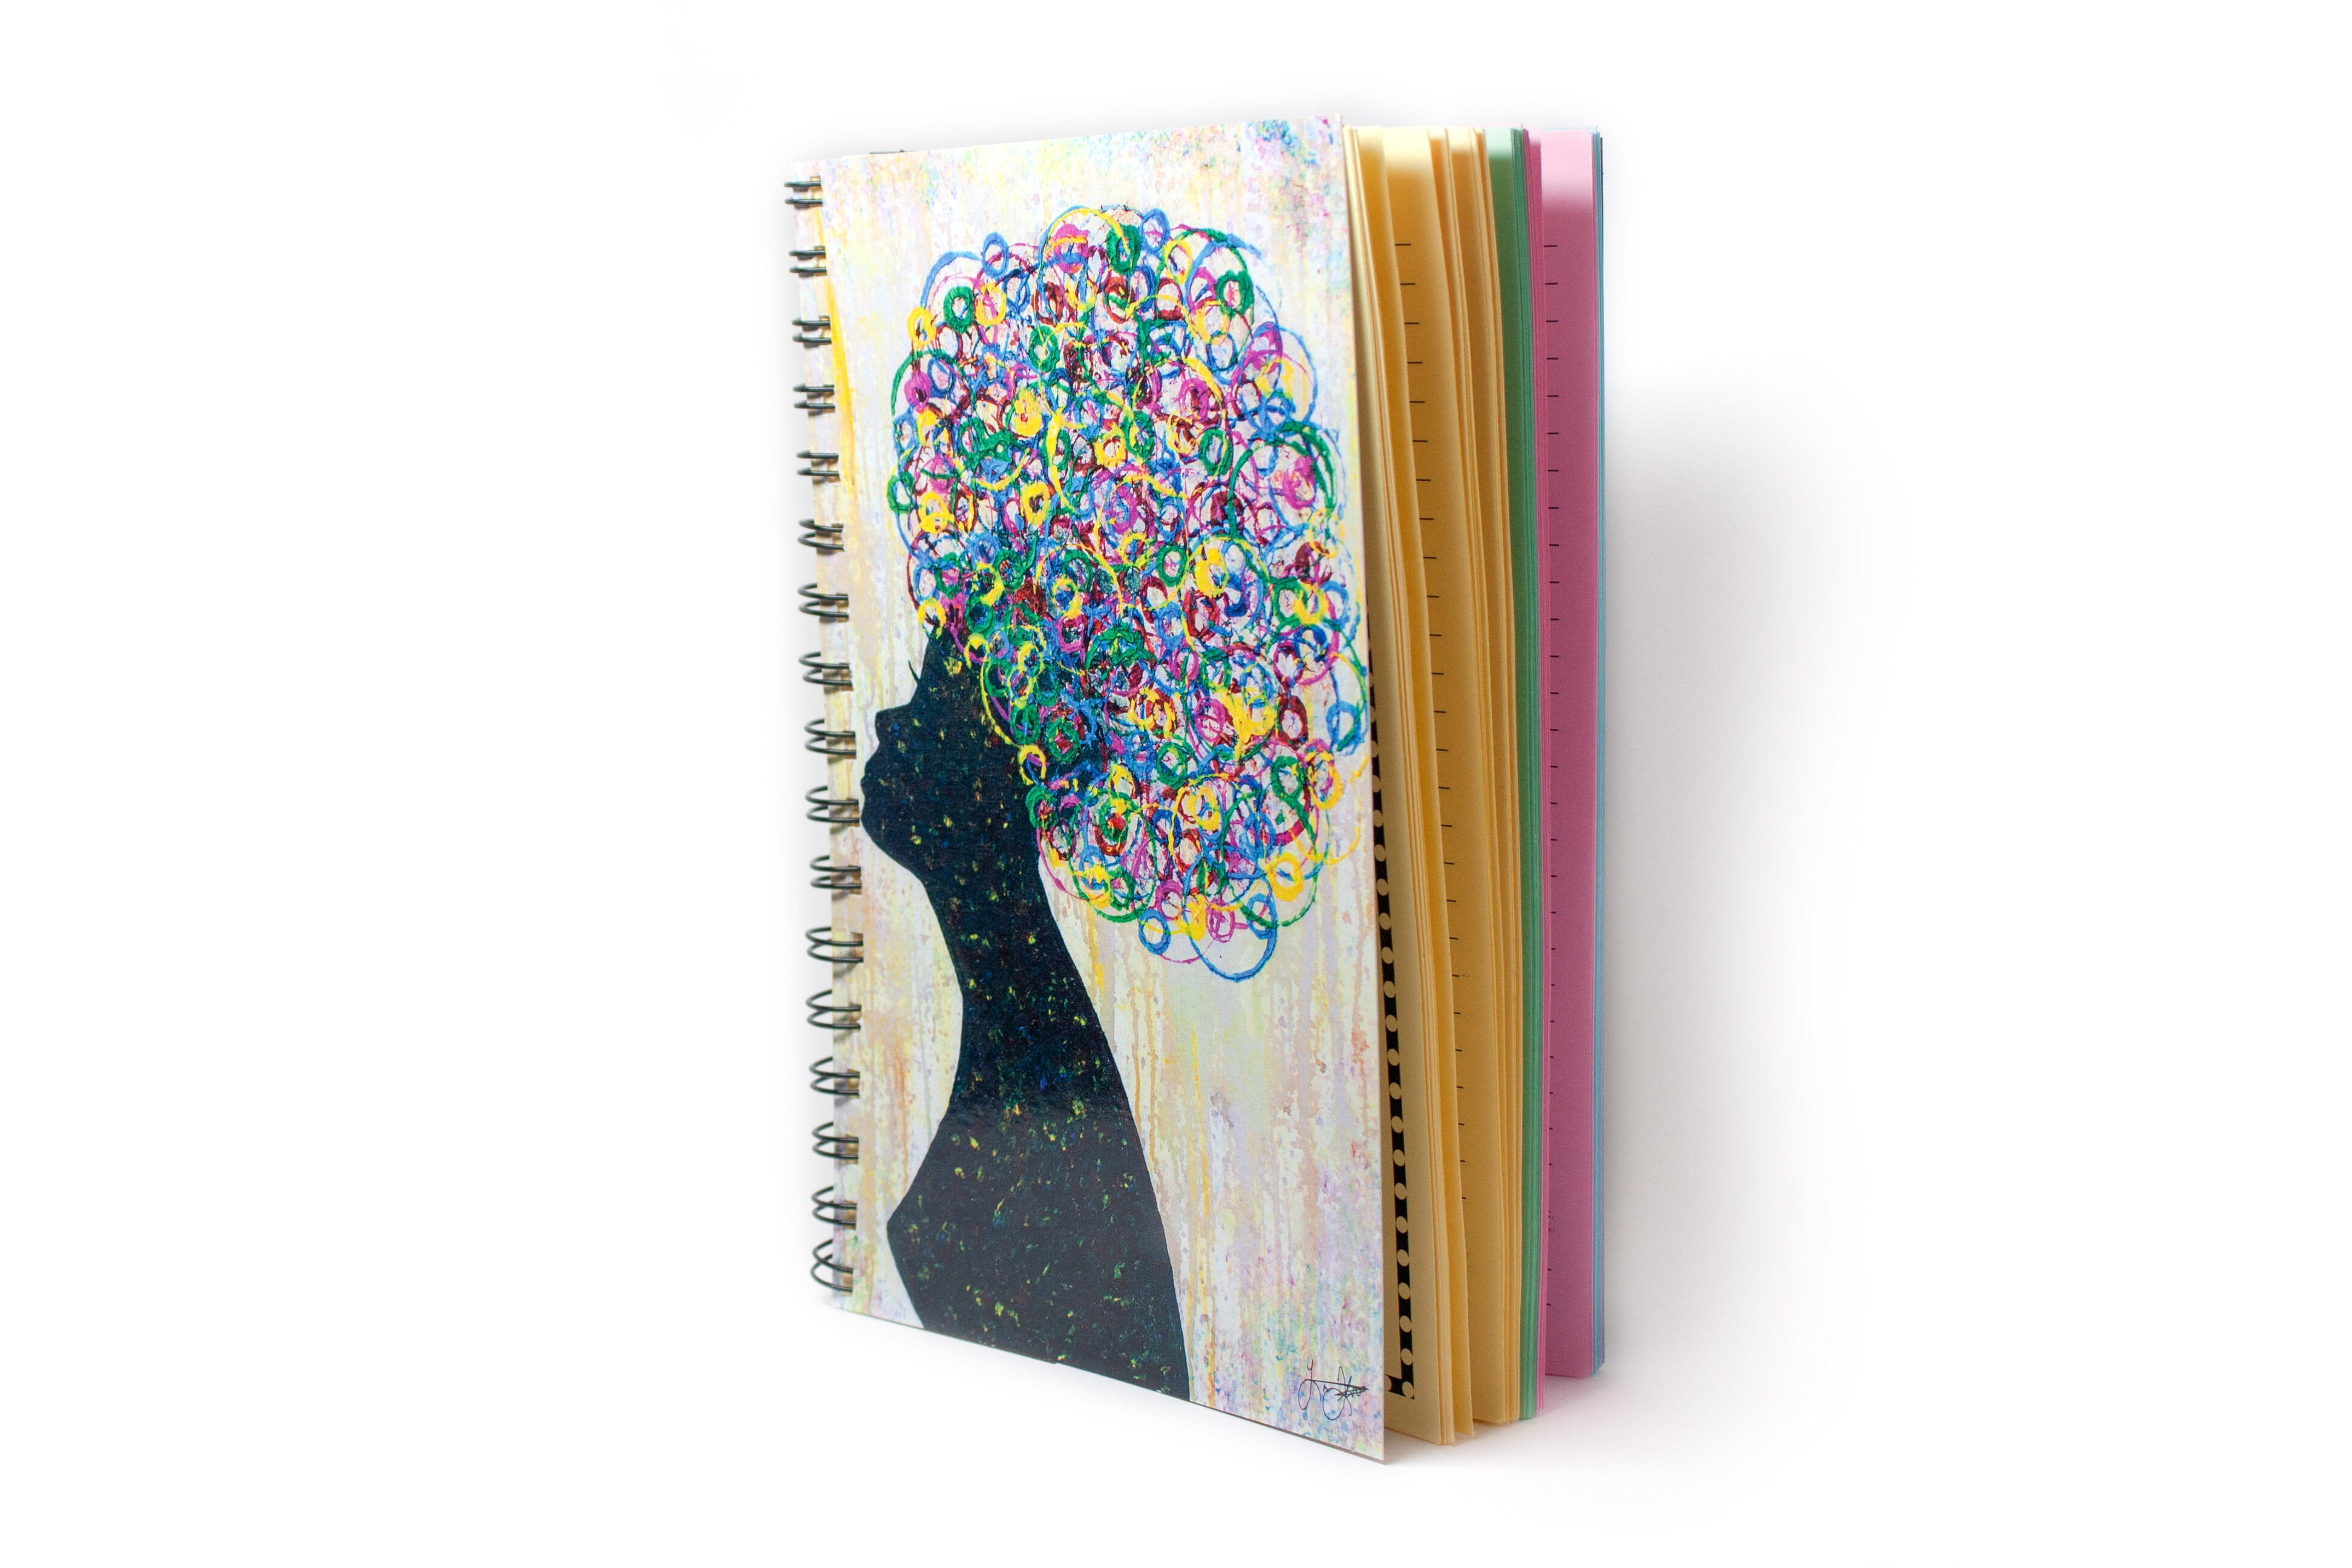 colorful silhouette woman tree roots original art custom notebook journal